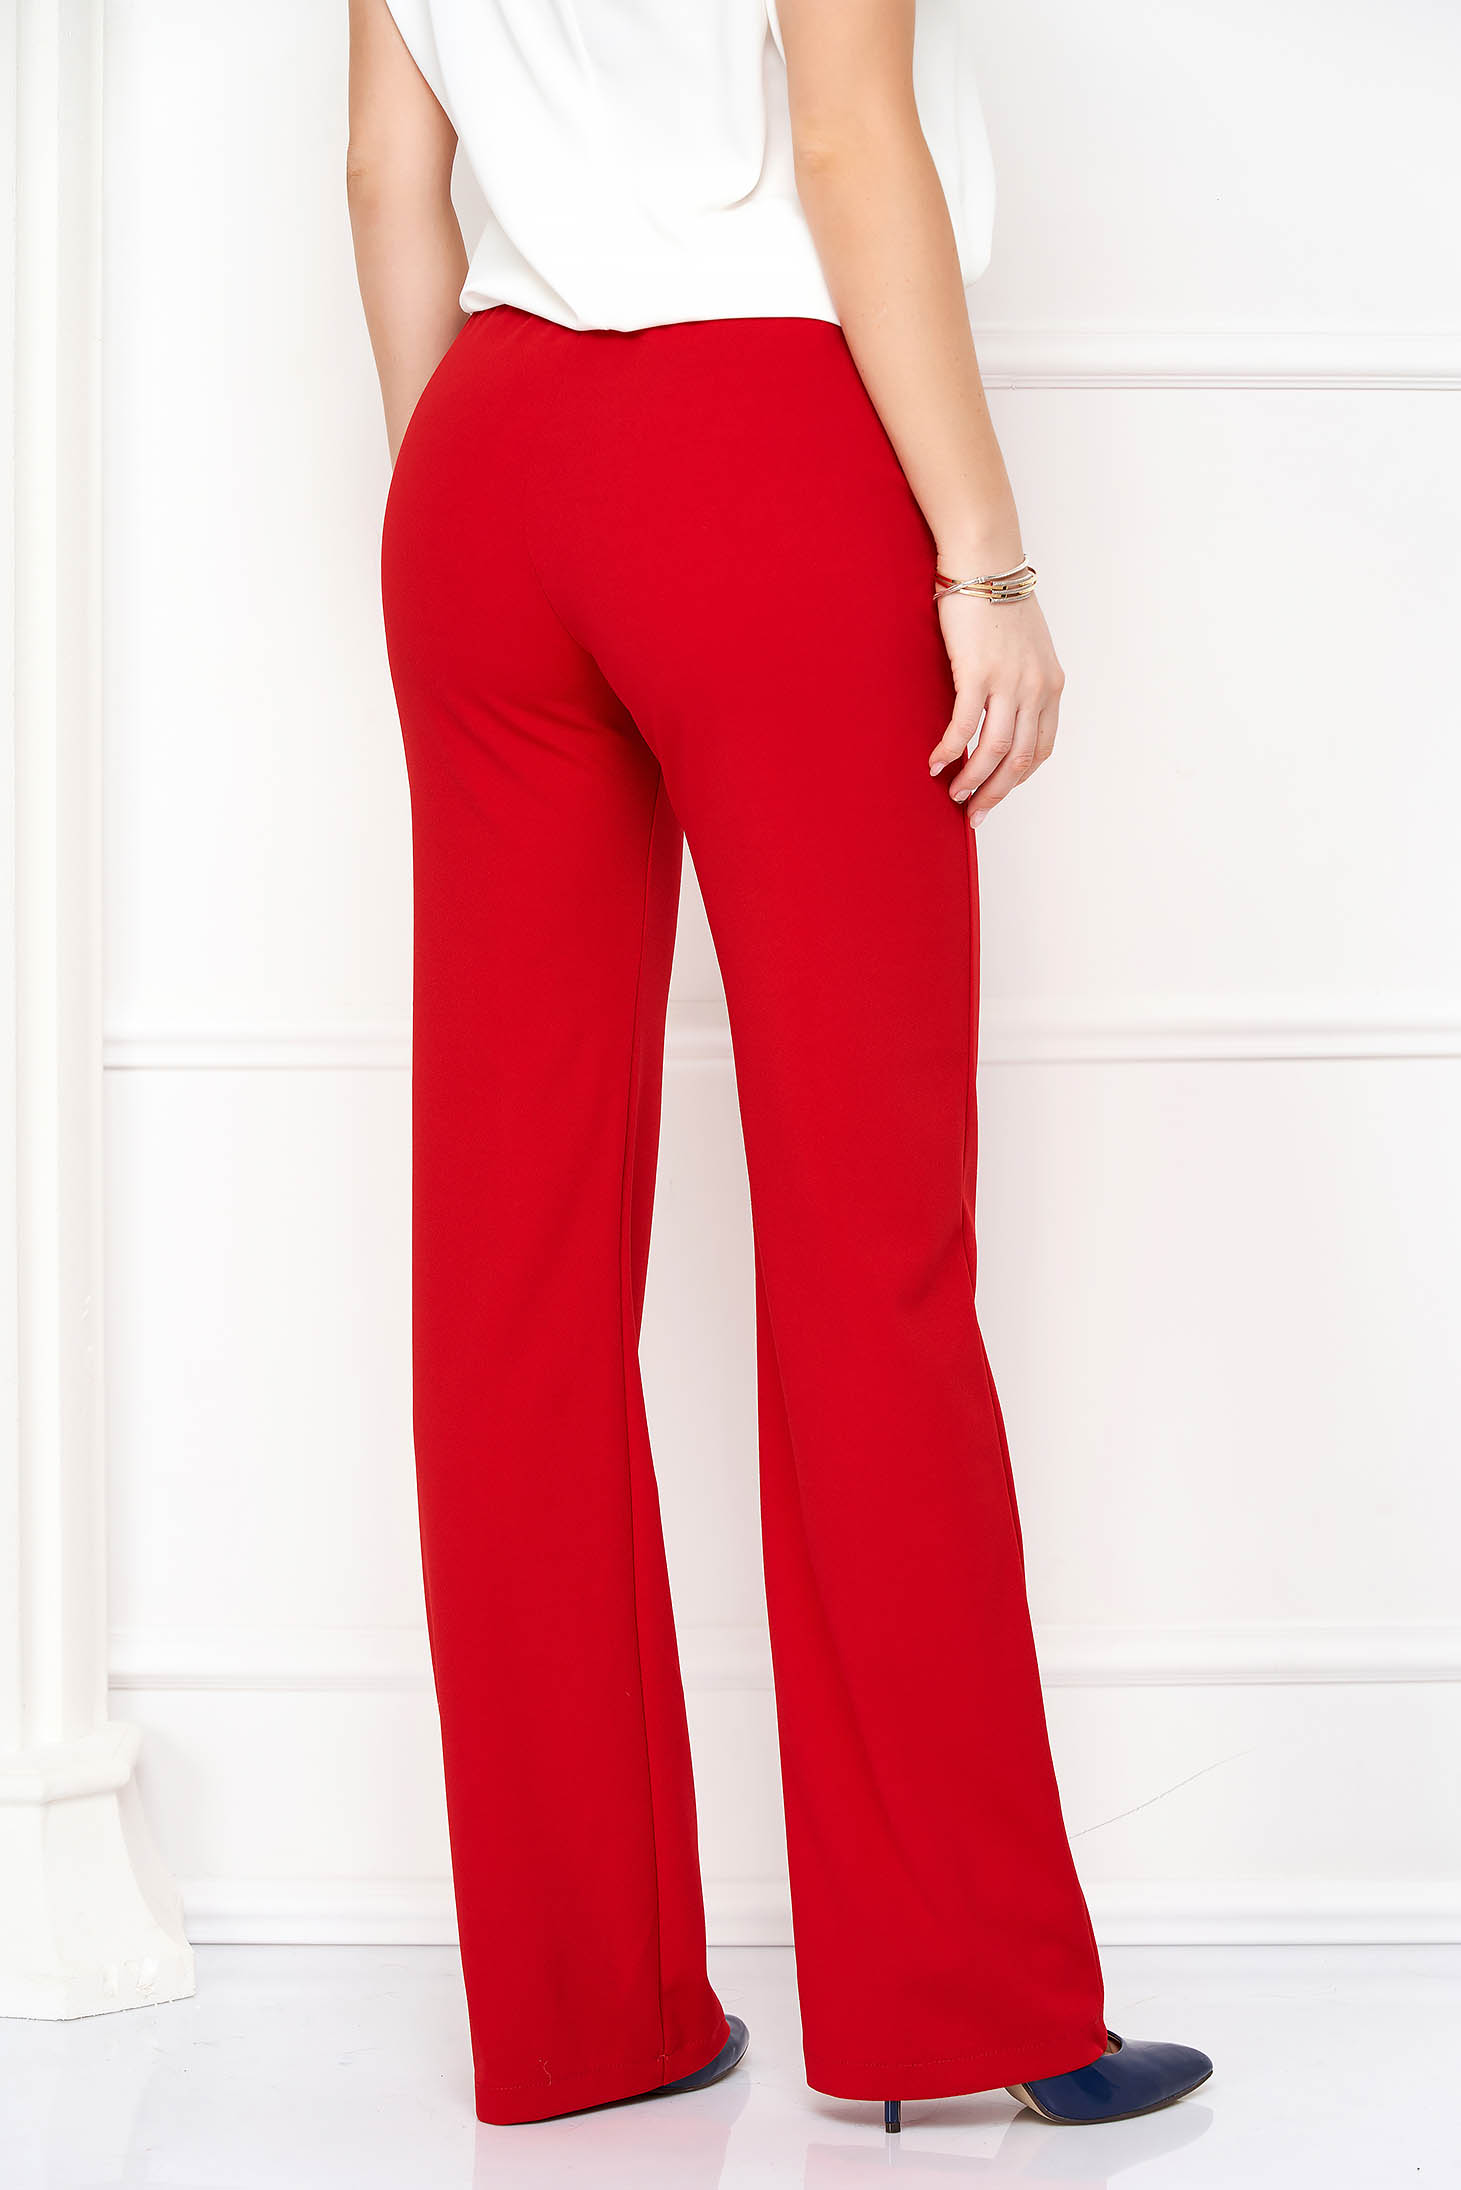 Pantaloni din crep rosii lungi evazati cu buzunare - StarShinerS 4 - StarShinerS.ro